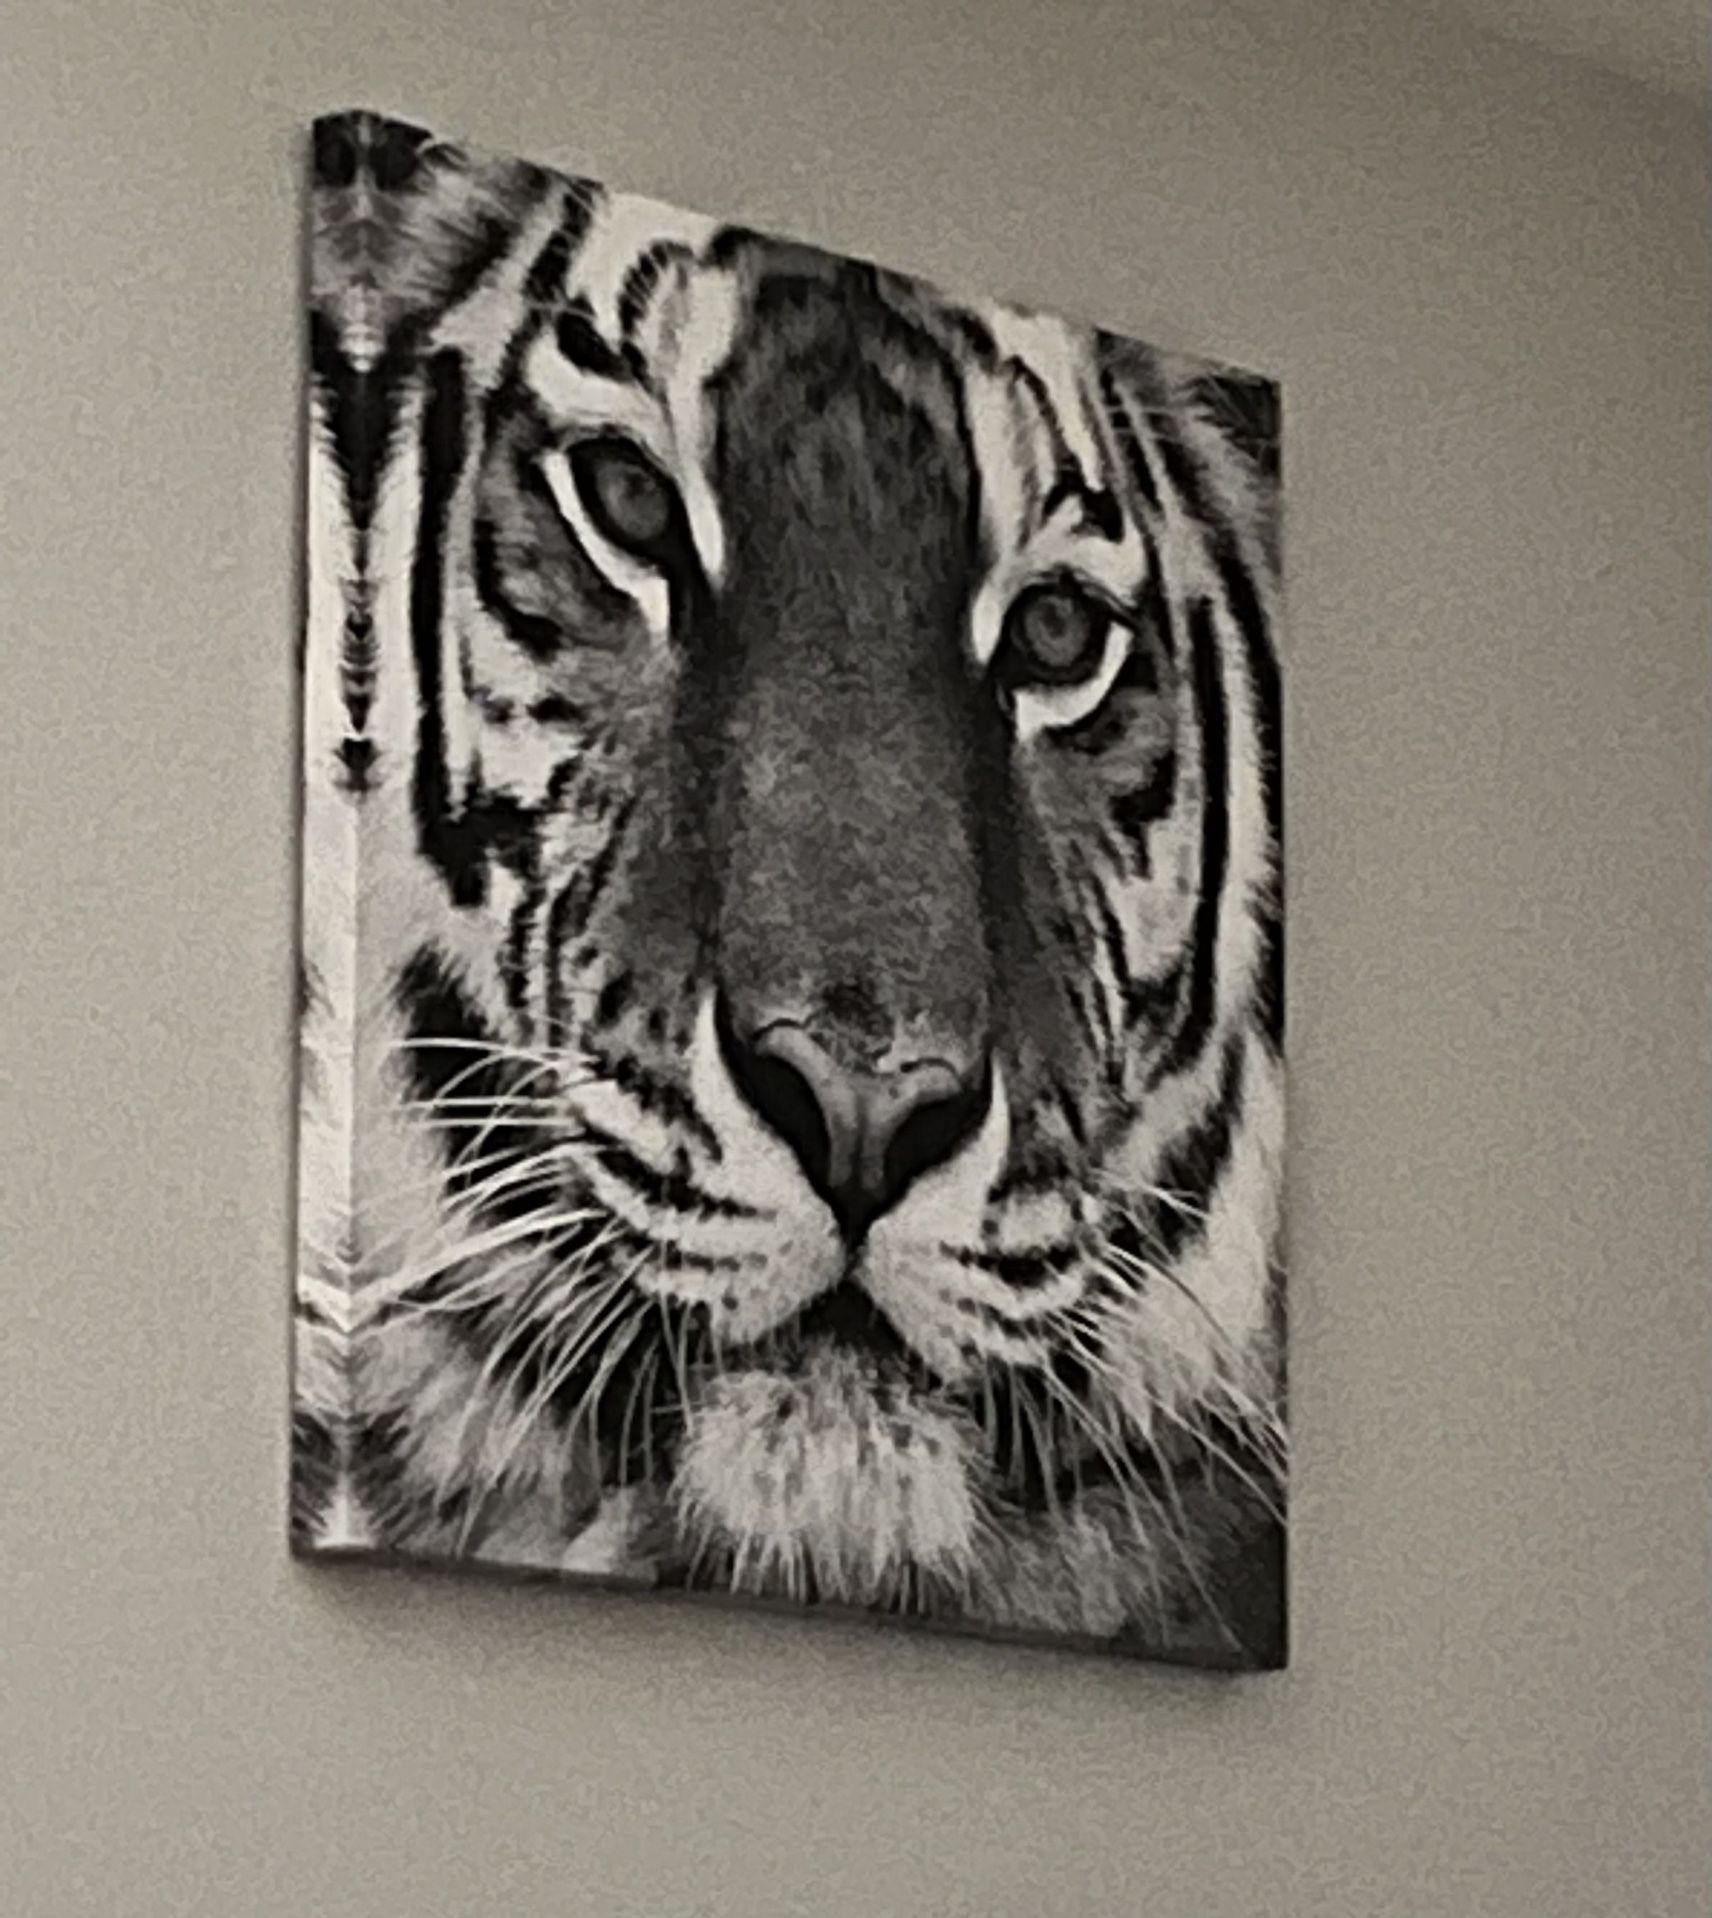 Tiger Canvas/ Realism Decor 